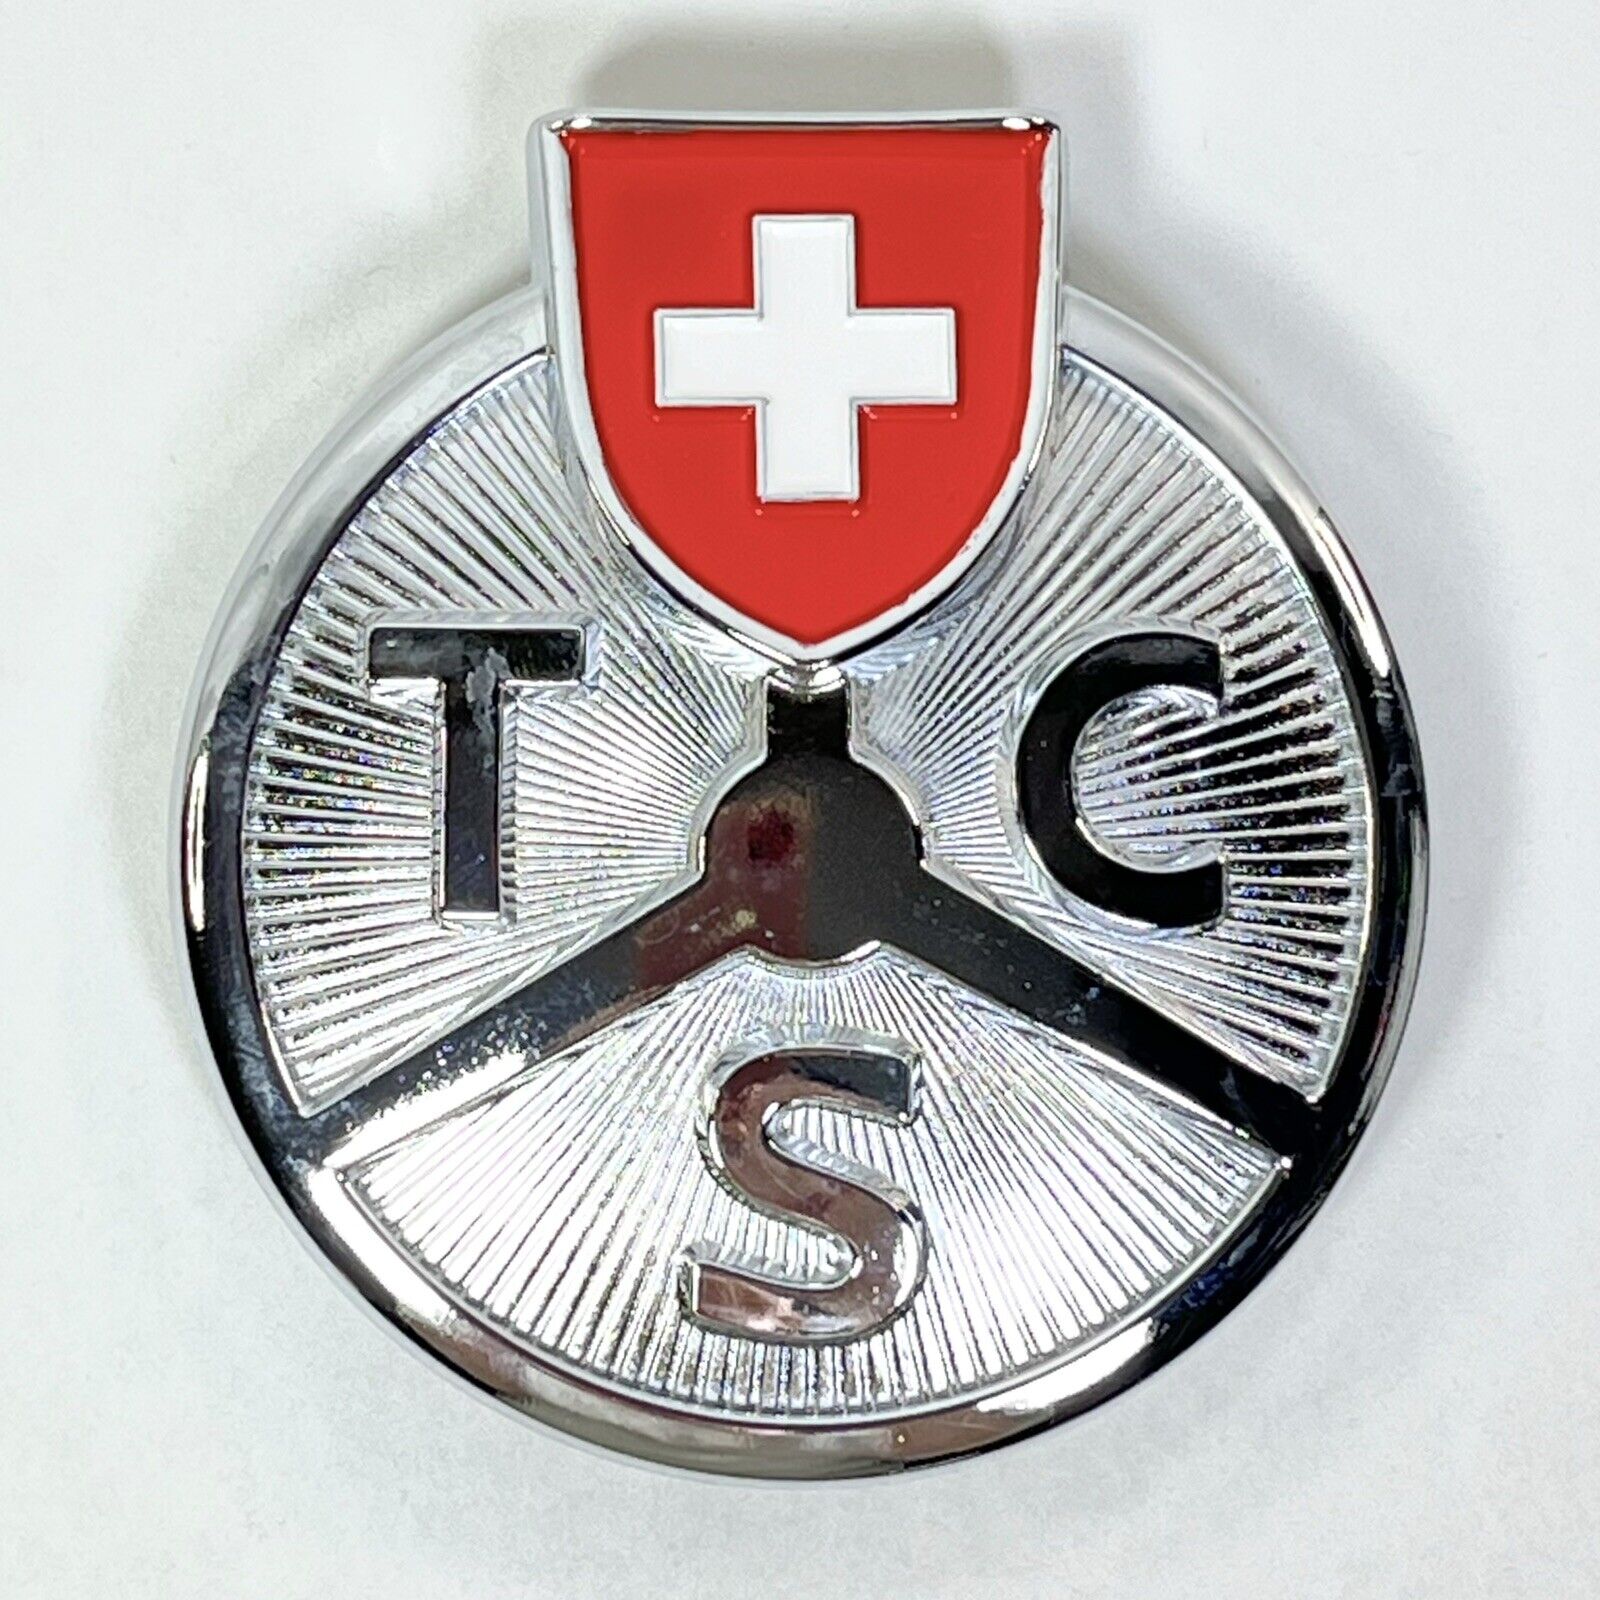 TOURING CLUB SUISSE Vintage Swiss Car Club Grille Badge Emblem Switzerland TCS